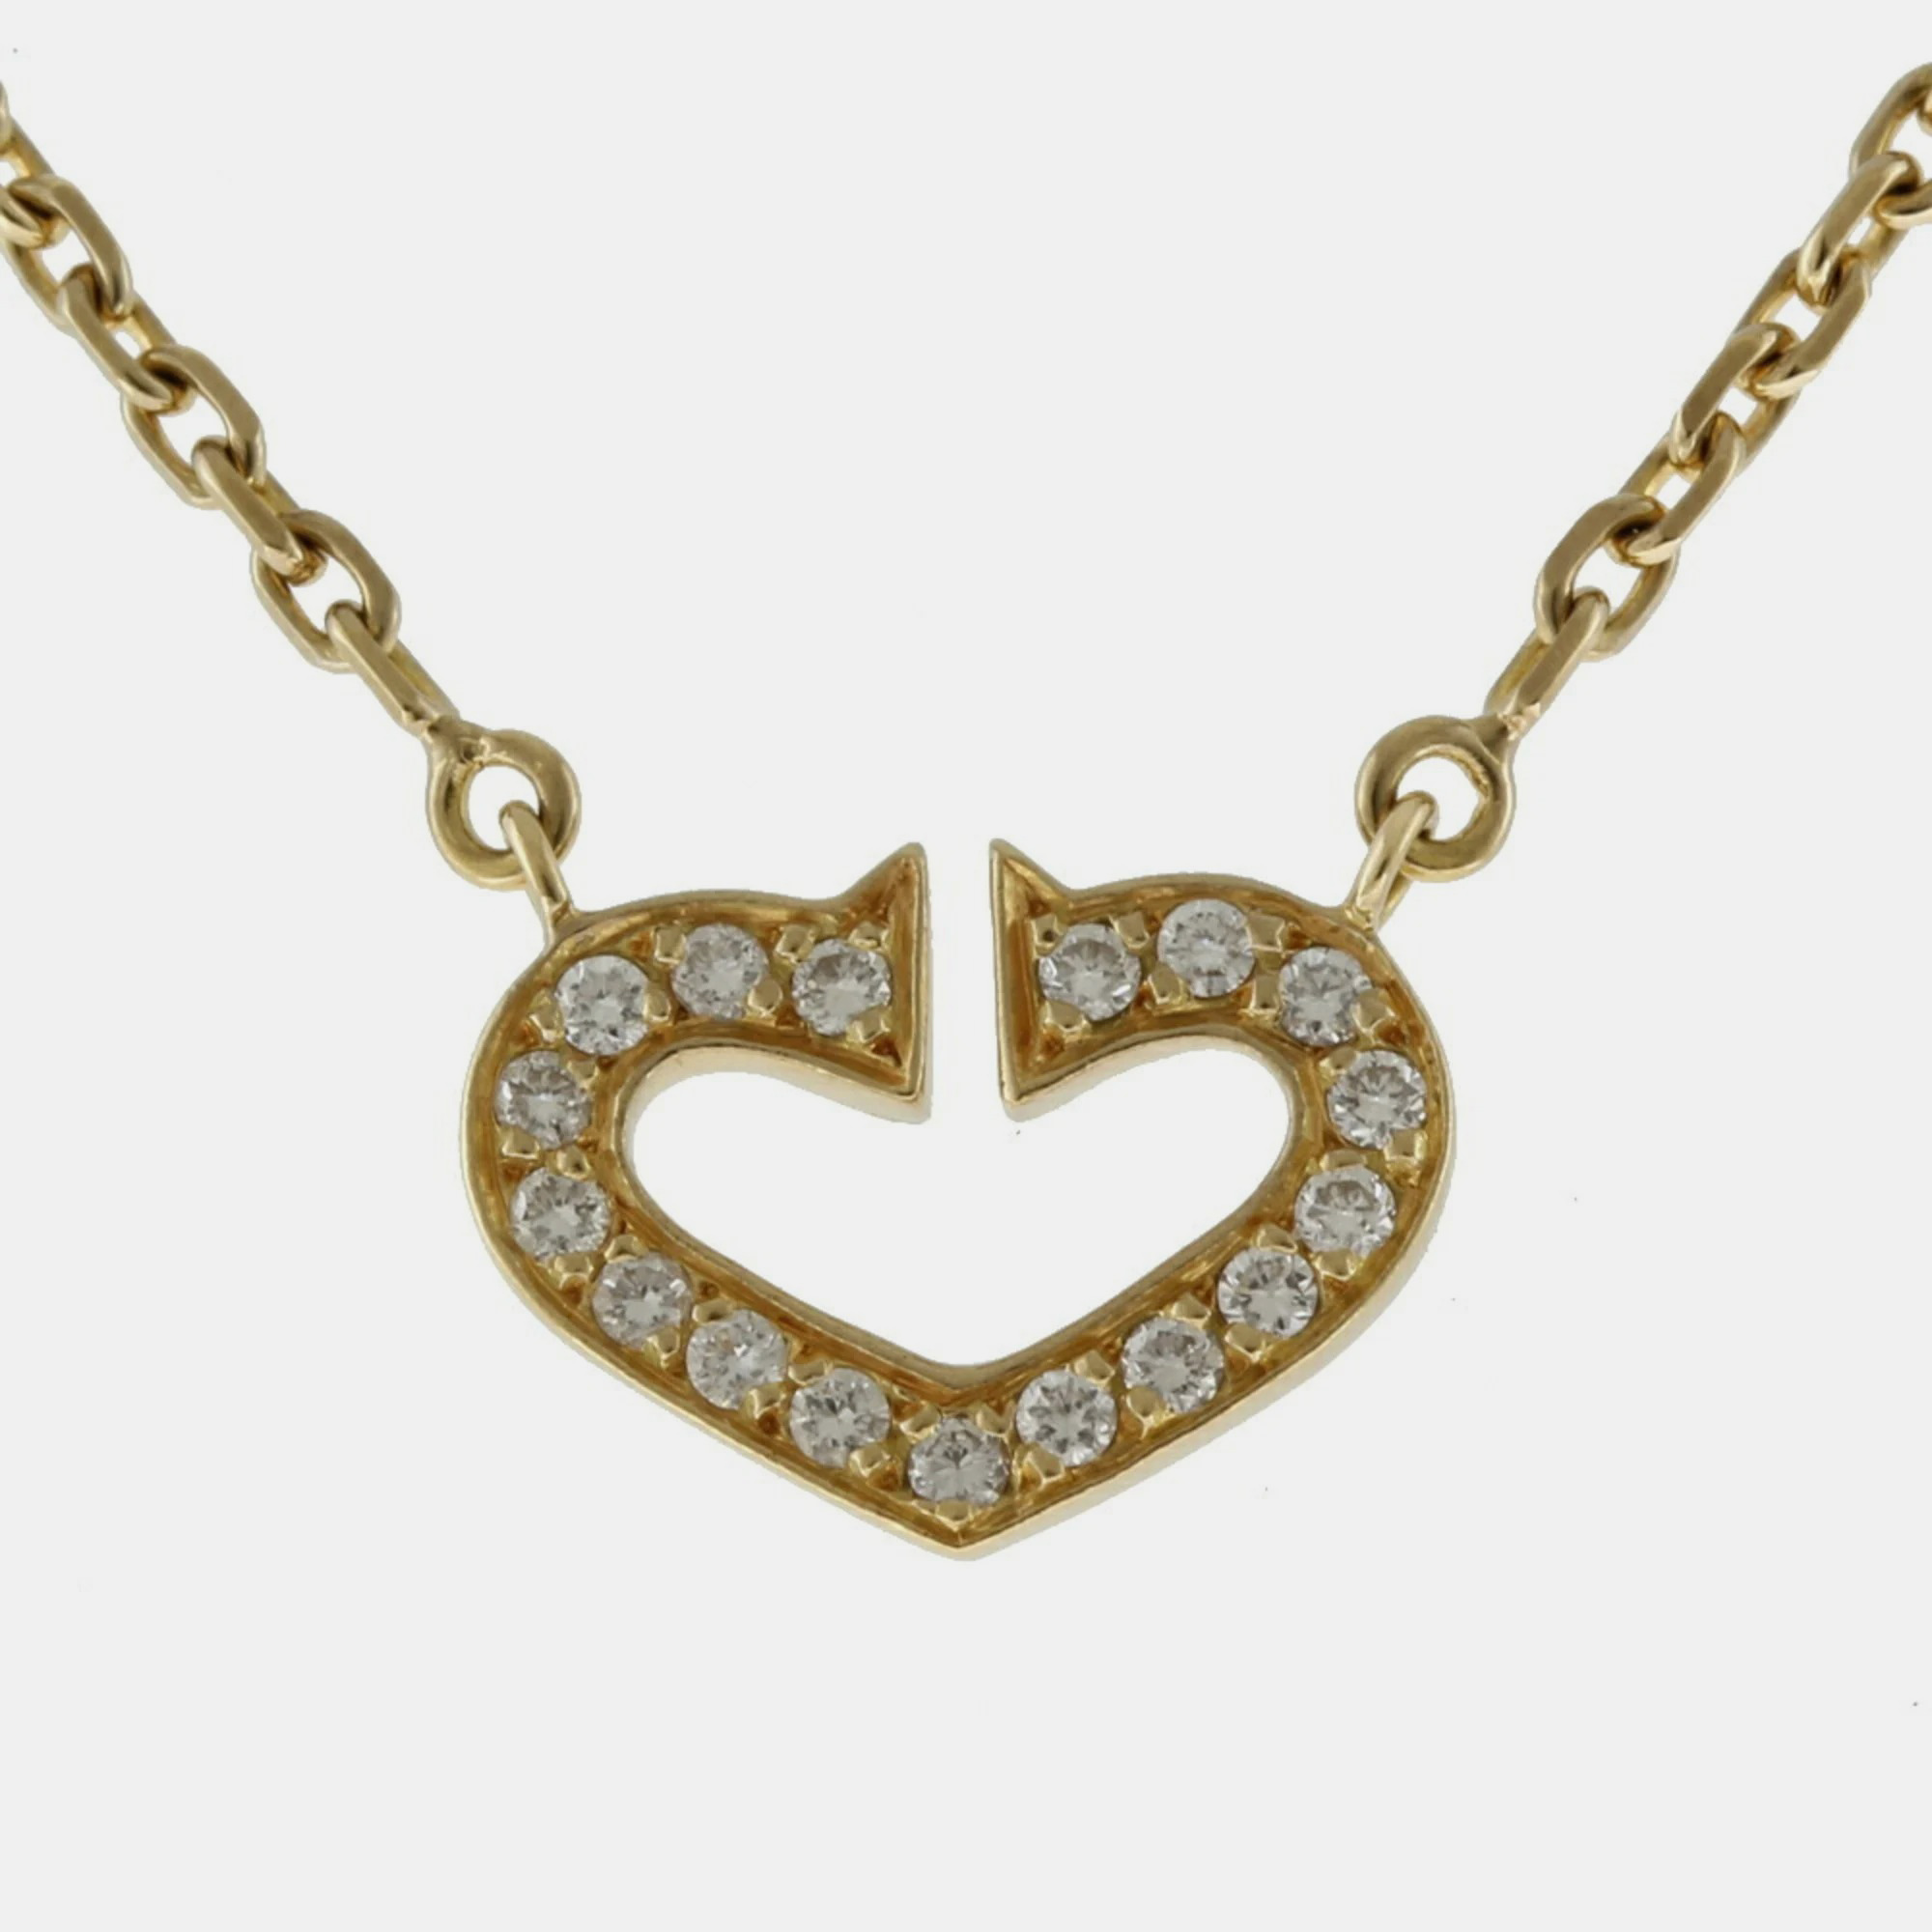 Cartier 18k yellow gold and diamond c de cartier heart necklace